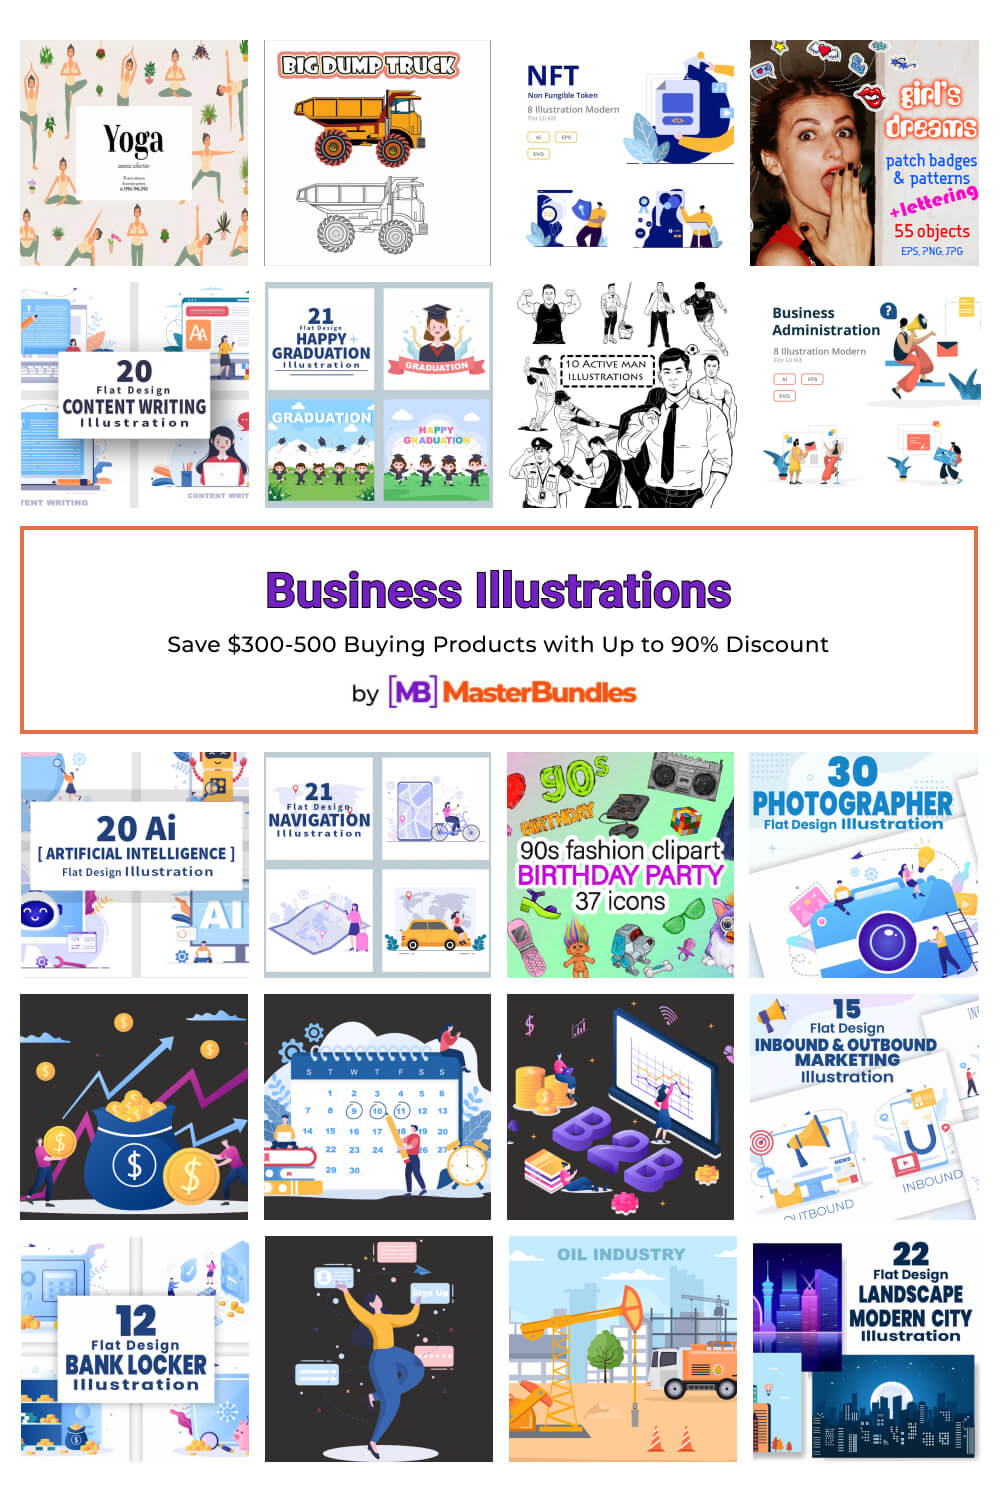 business illustrations pinterest image.